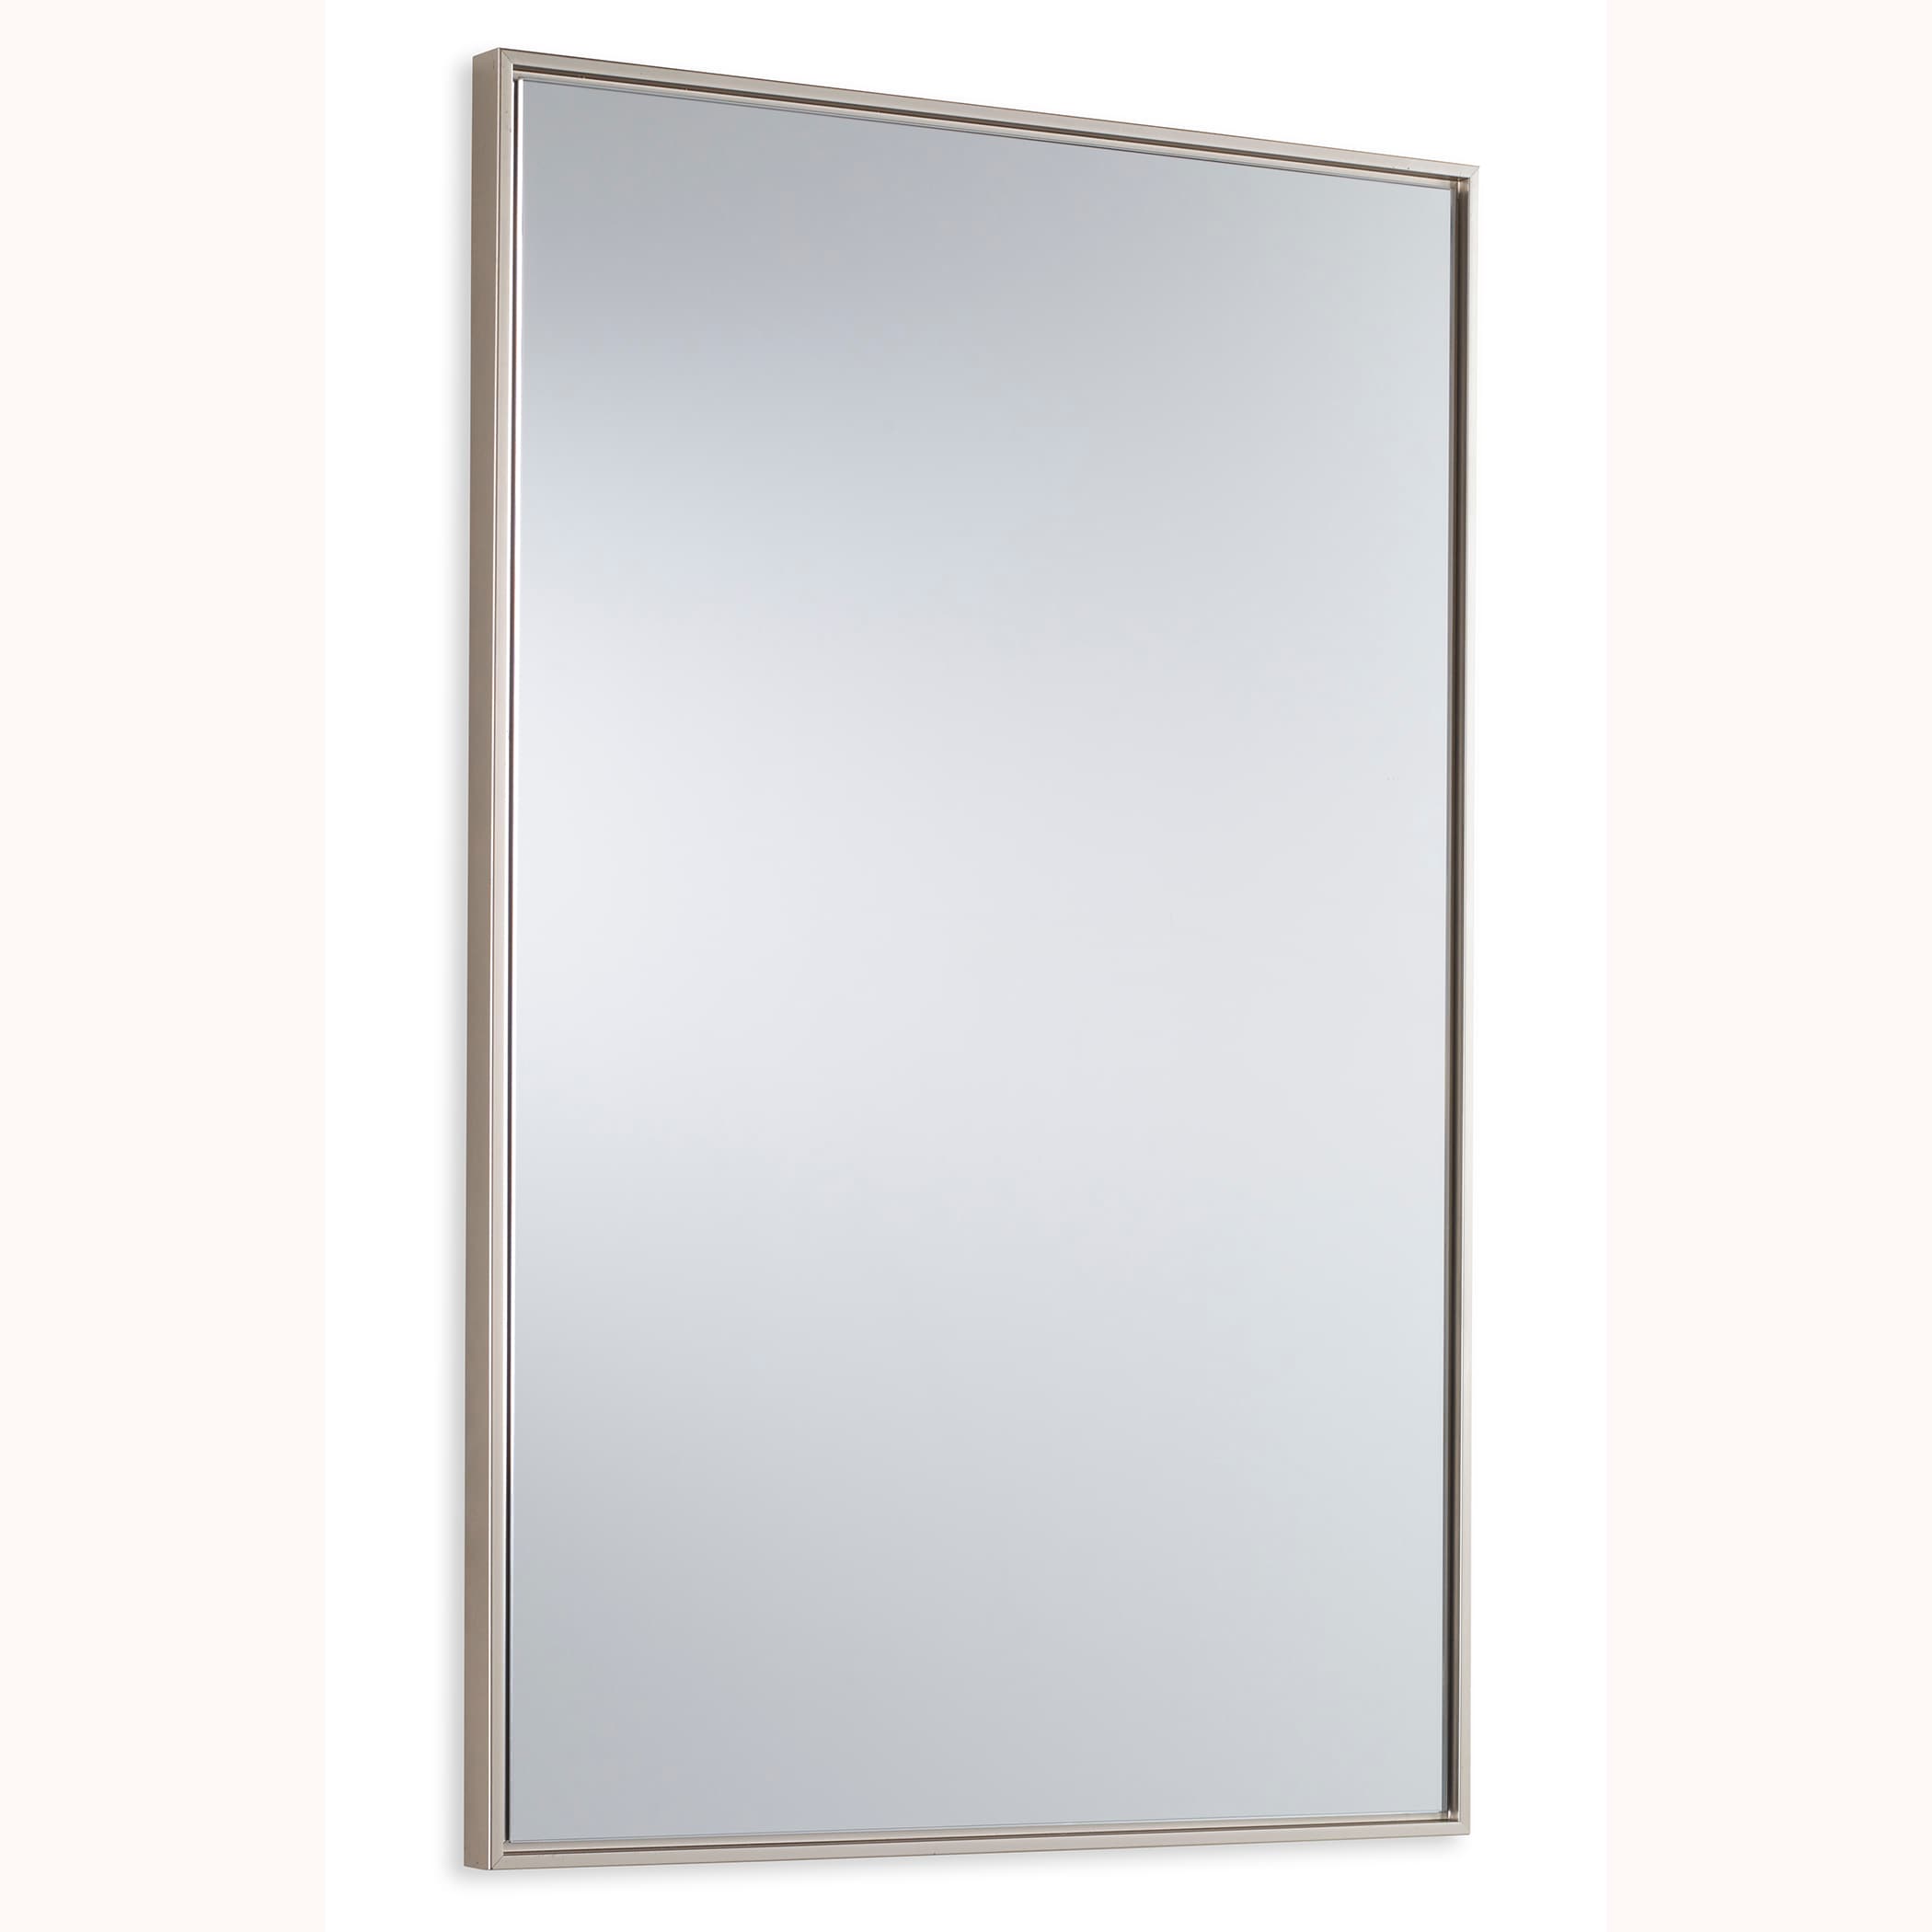 allen + roth 20-in W x 30-in H Warm Silver Framed Wall Mirror